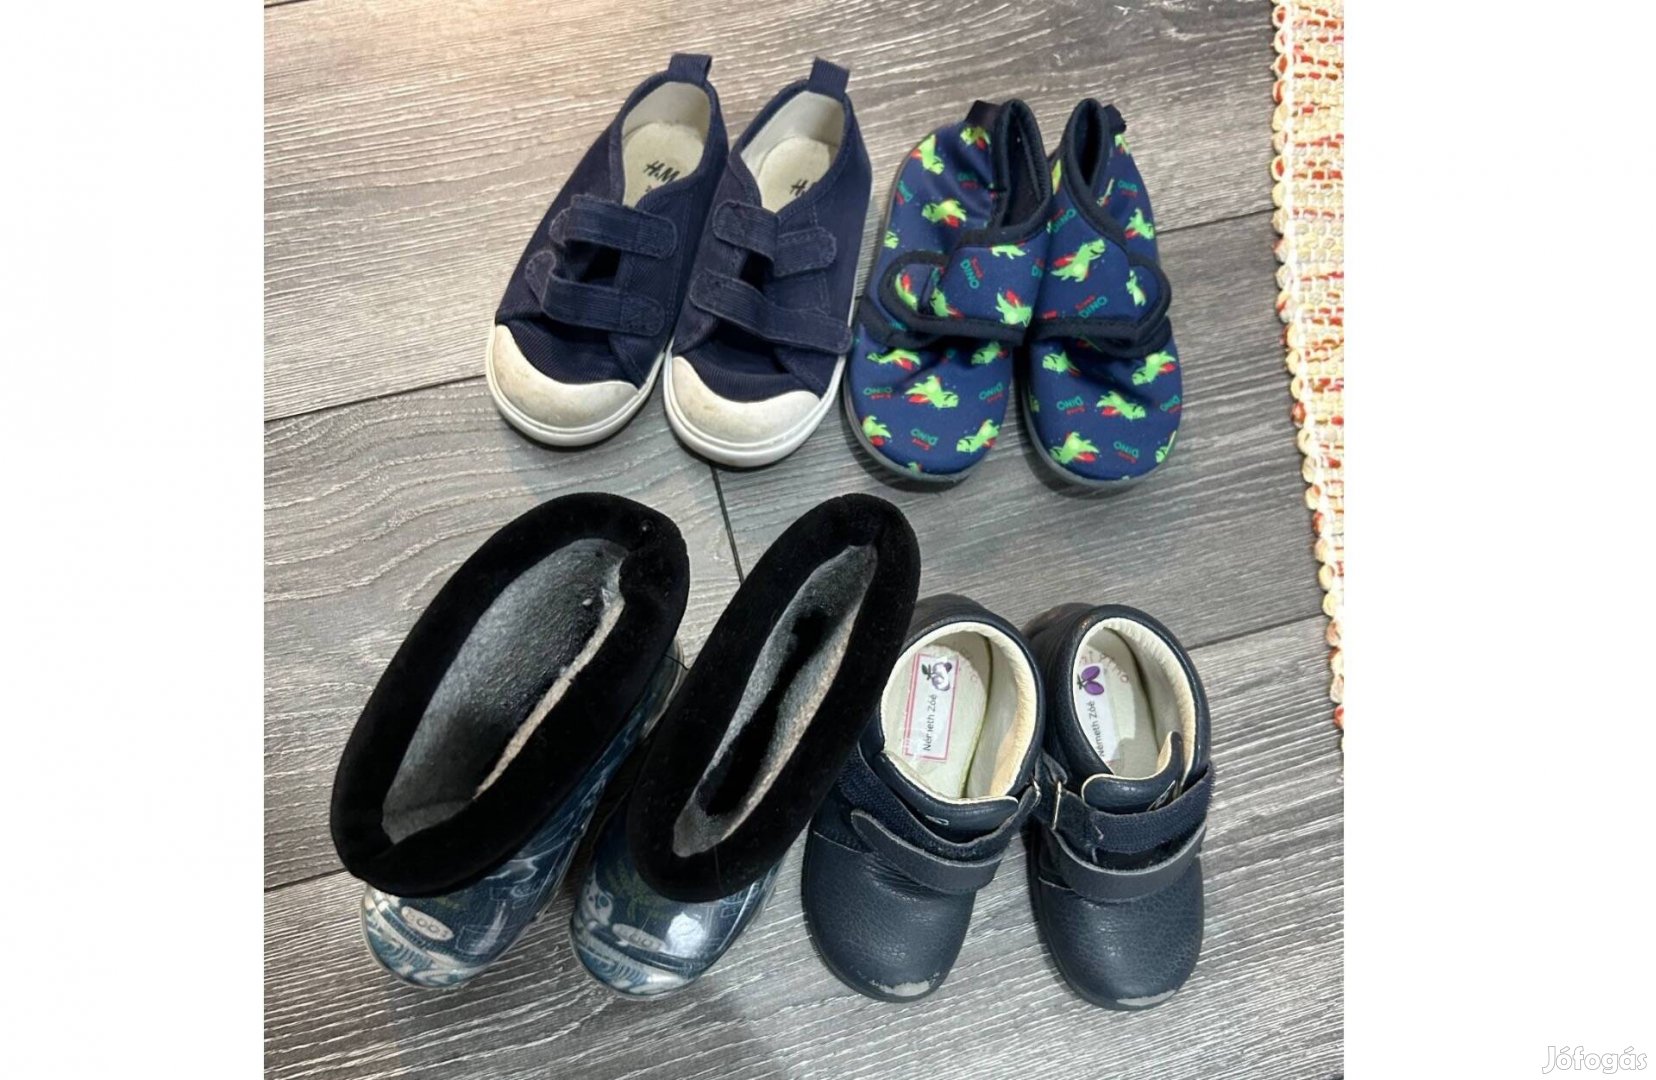 H&M, Primigi bőr cipők, Zetpol gumicsizma béléssel, 23-24 fiú cipők